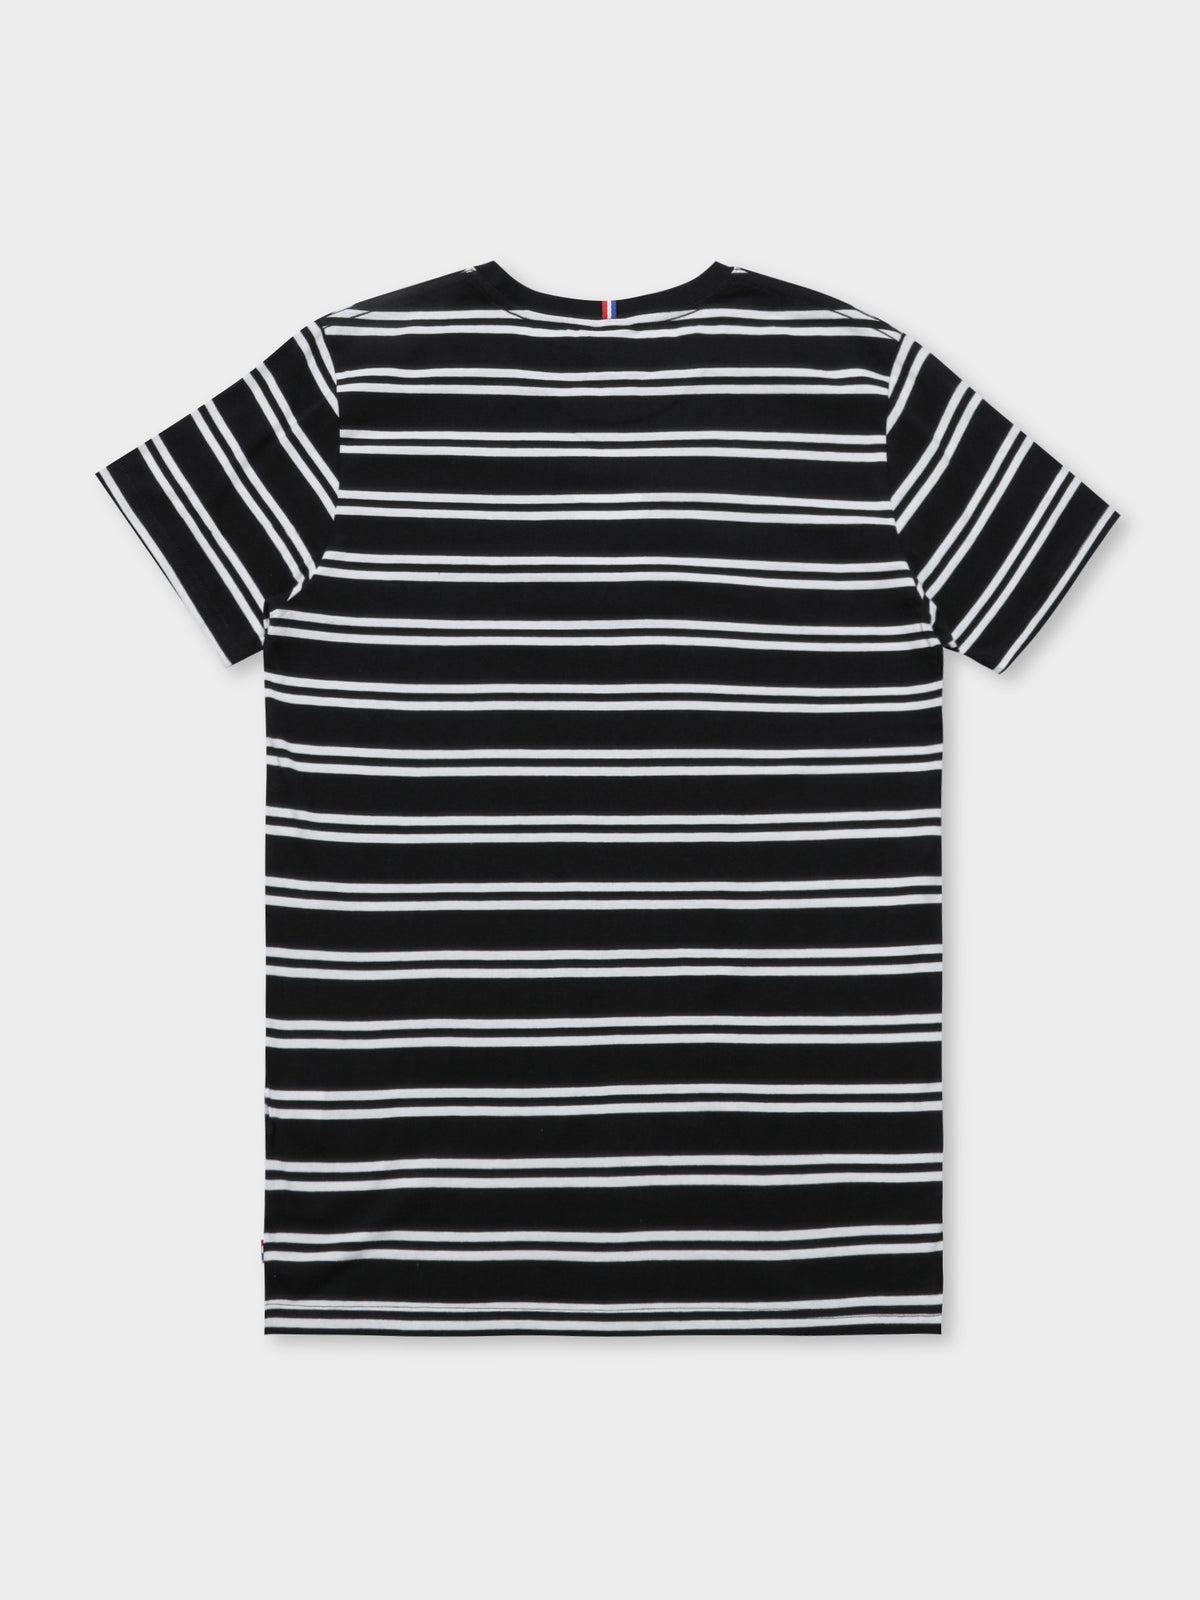 Essential Stripe T-Shirt in Black